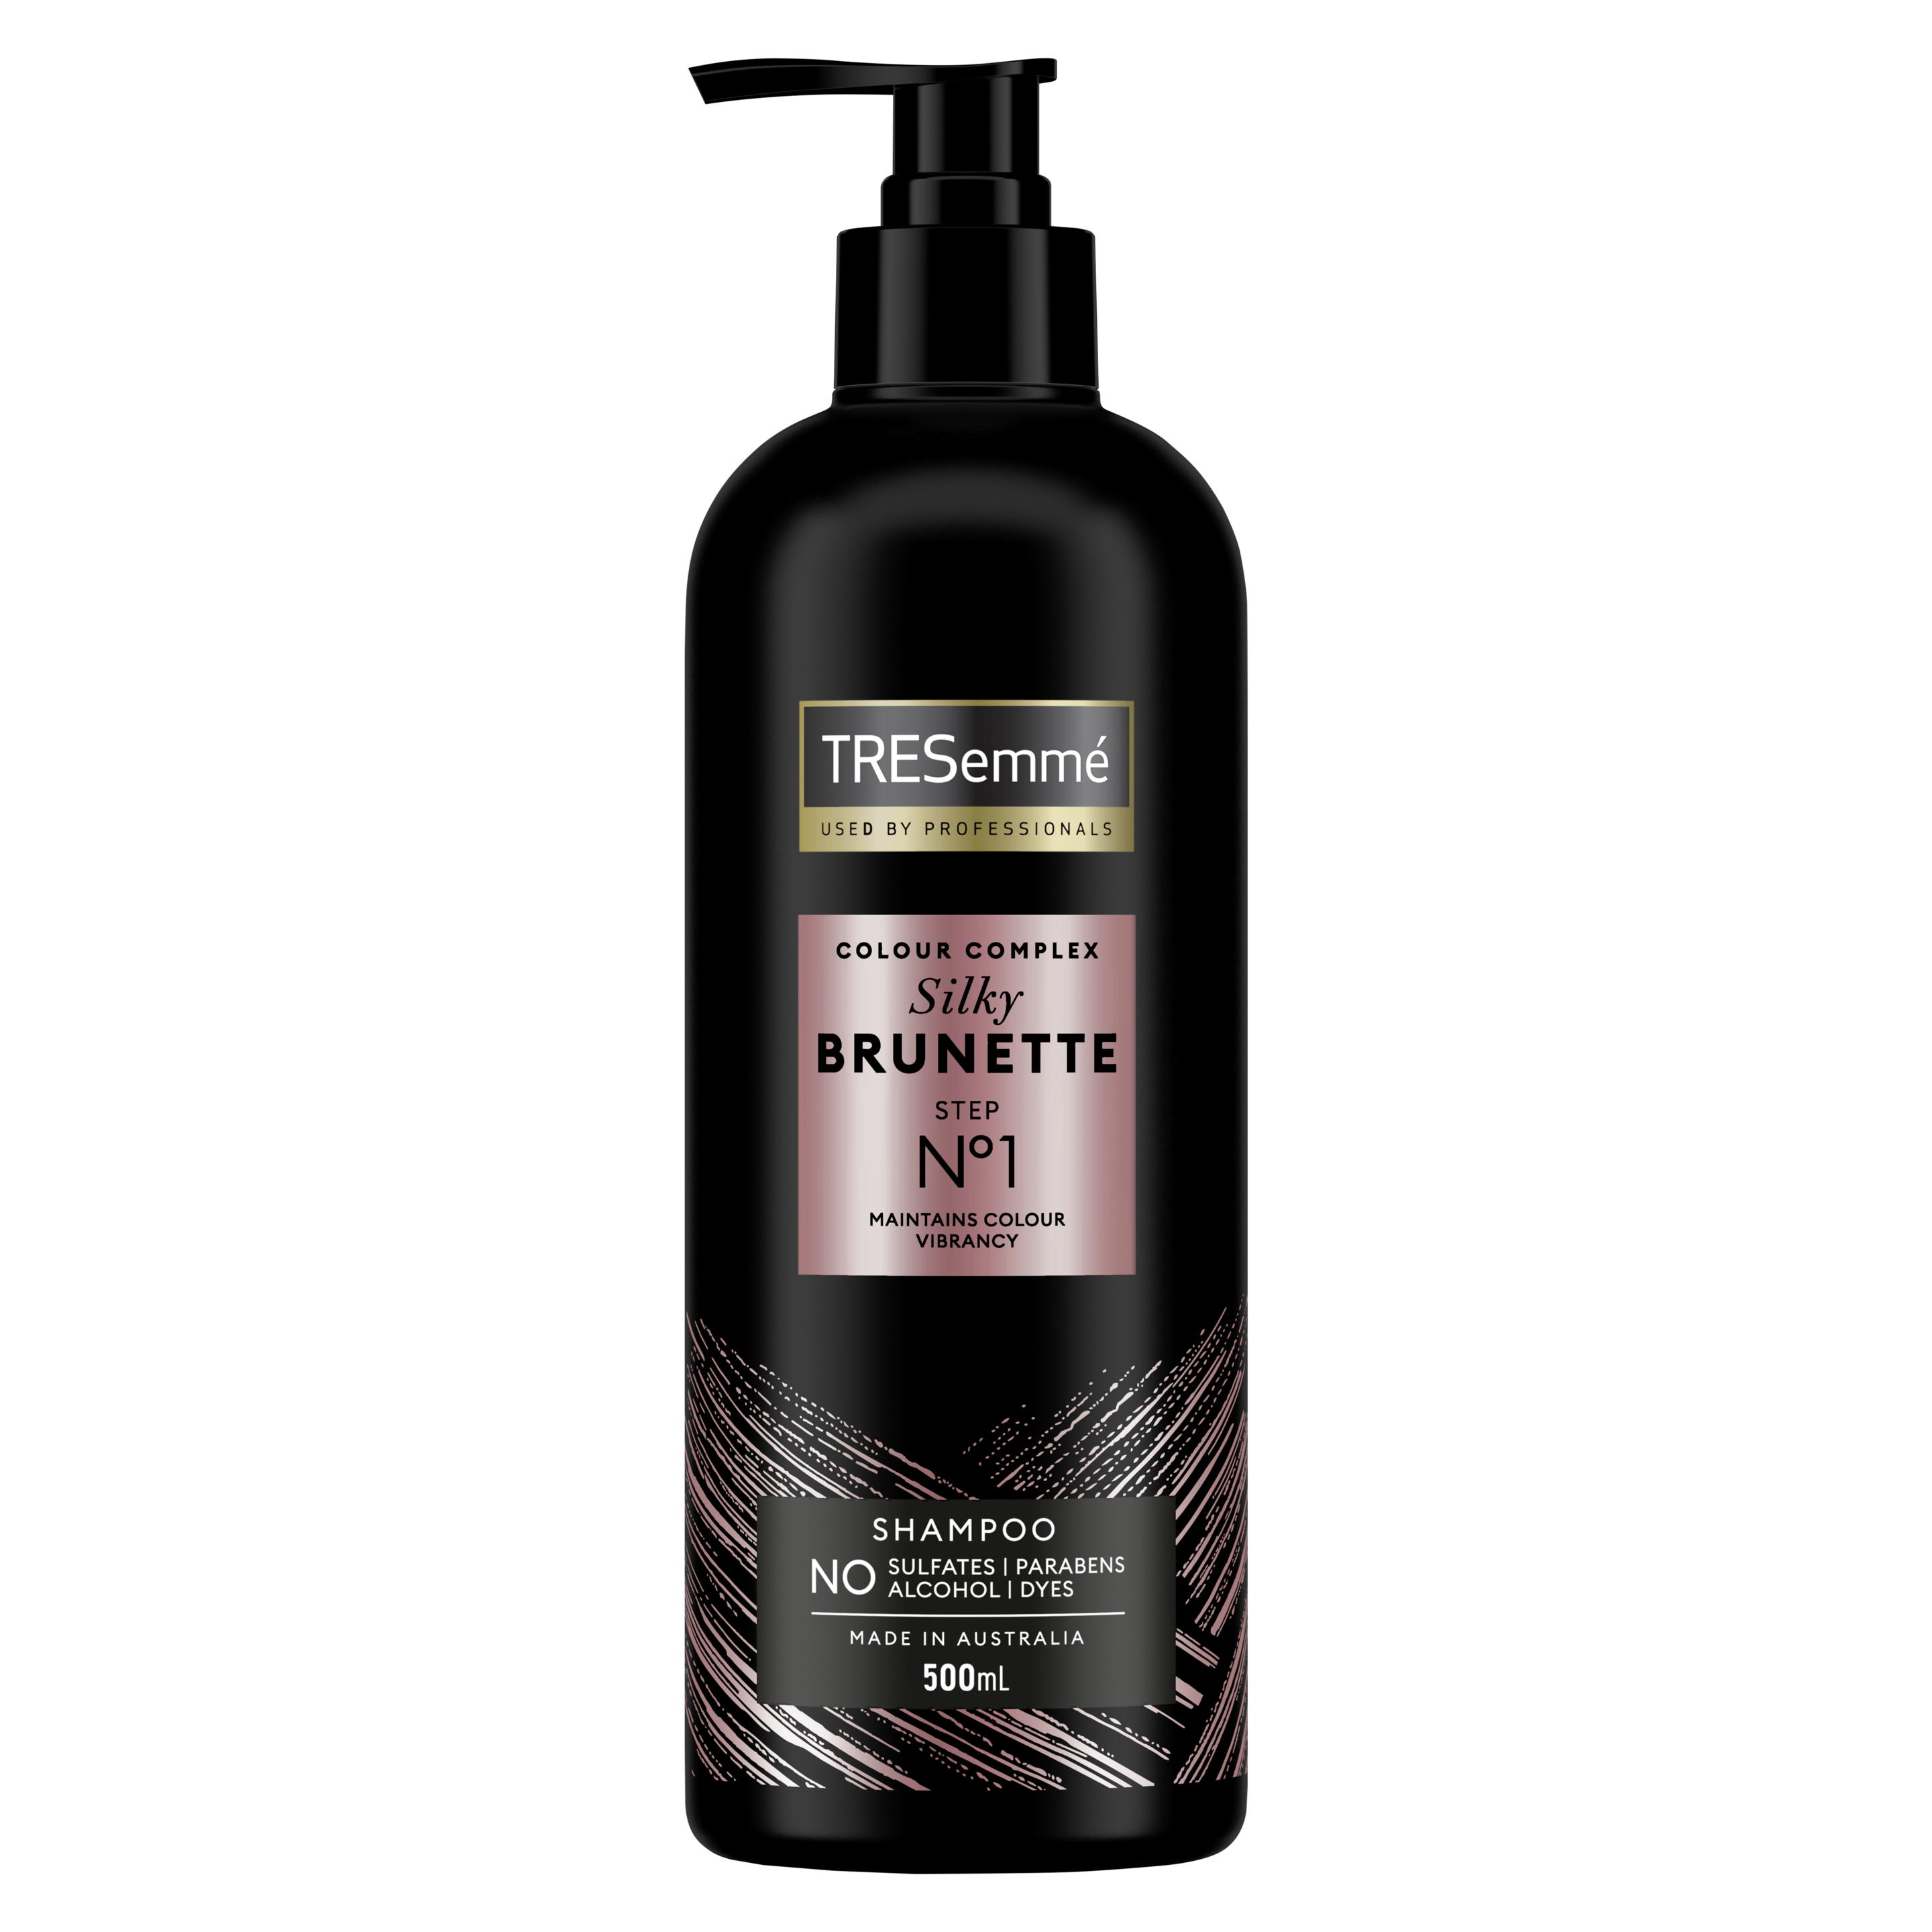 A 500ml bottle of TRESemmé Silky Brunette Shampoo